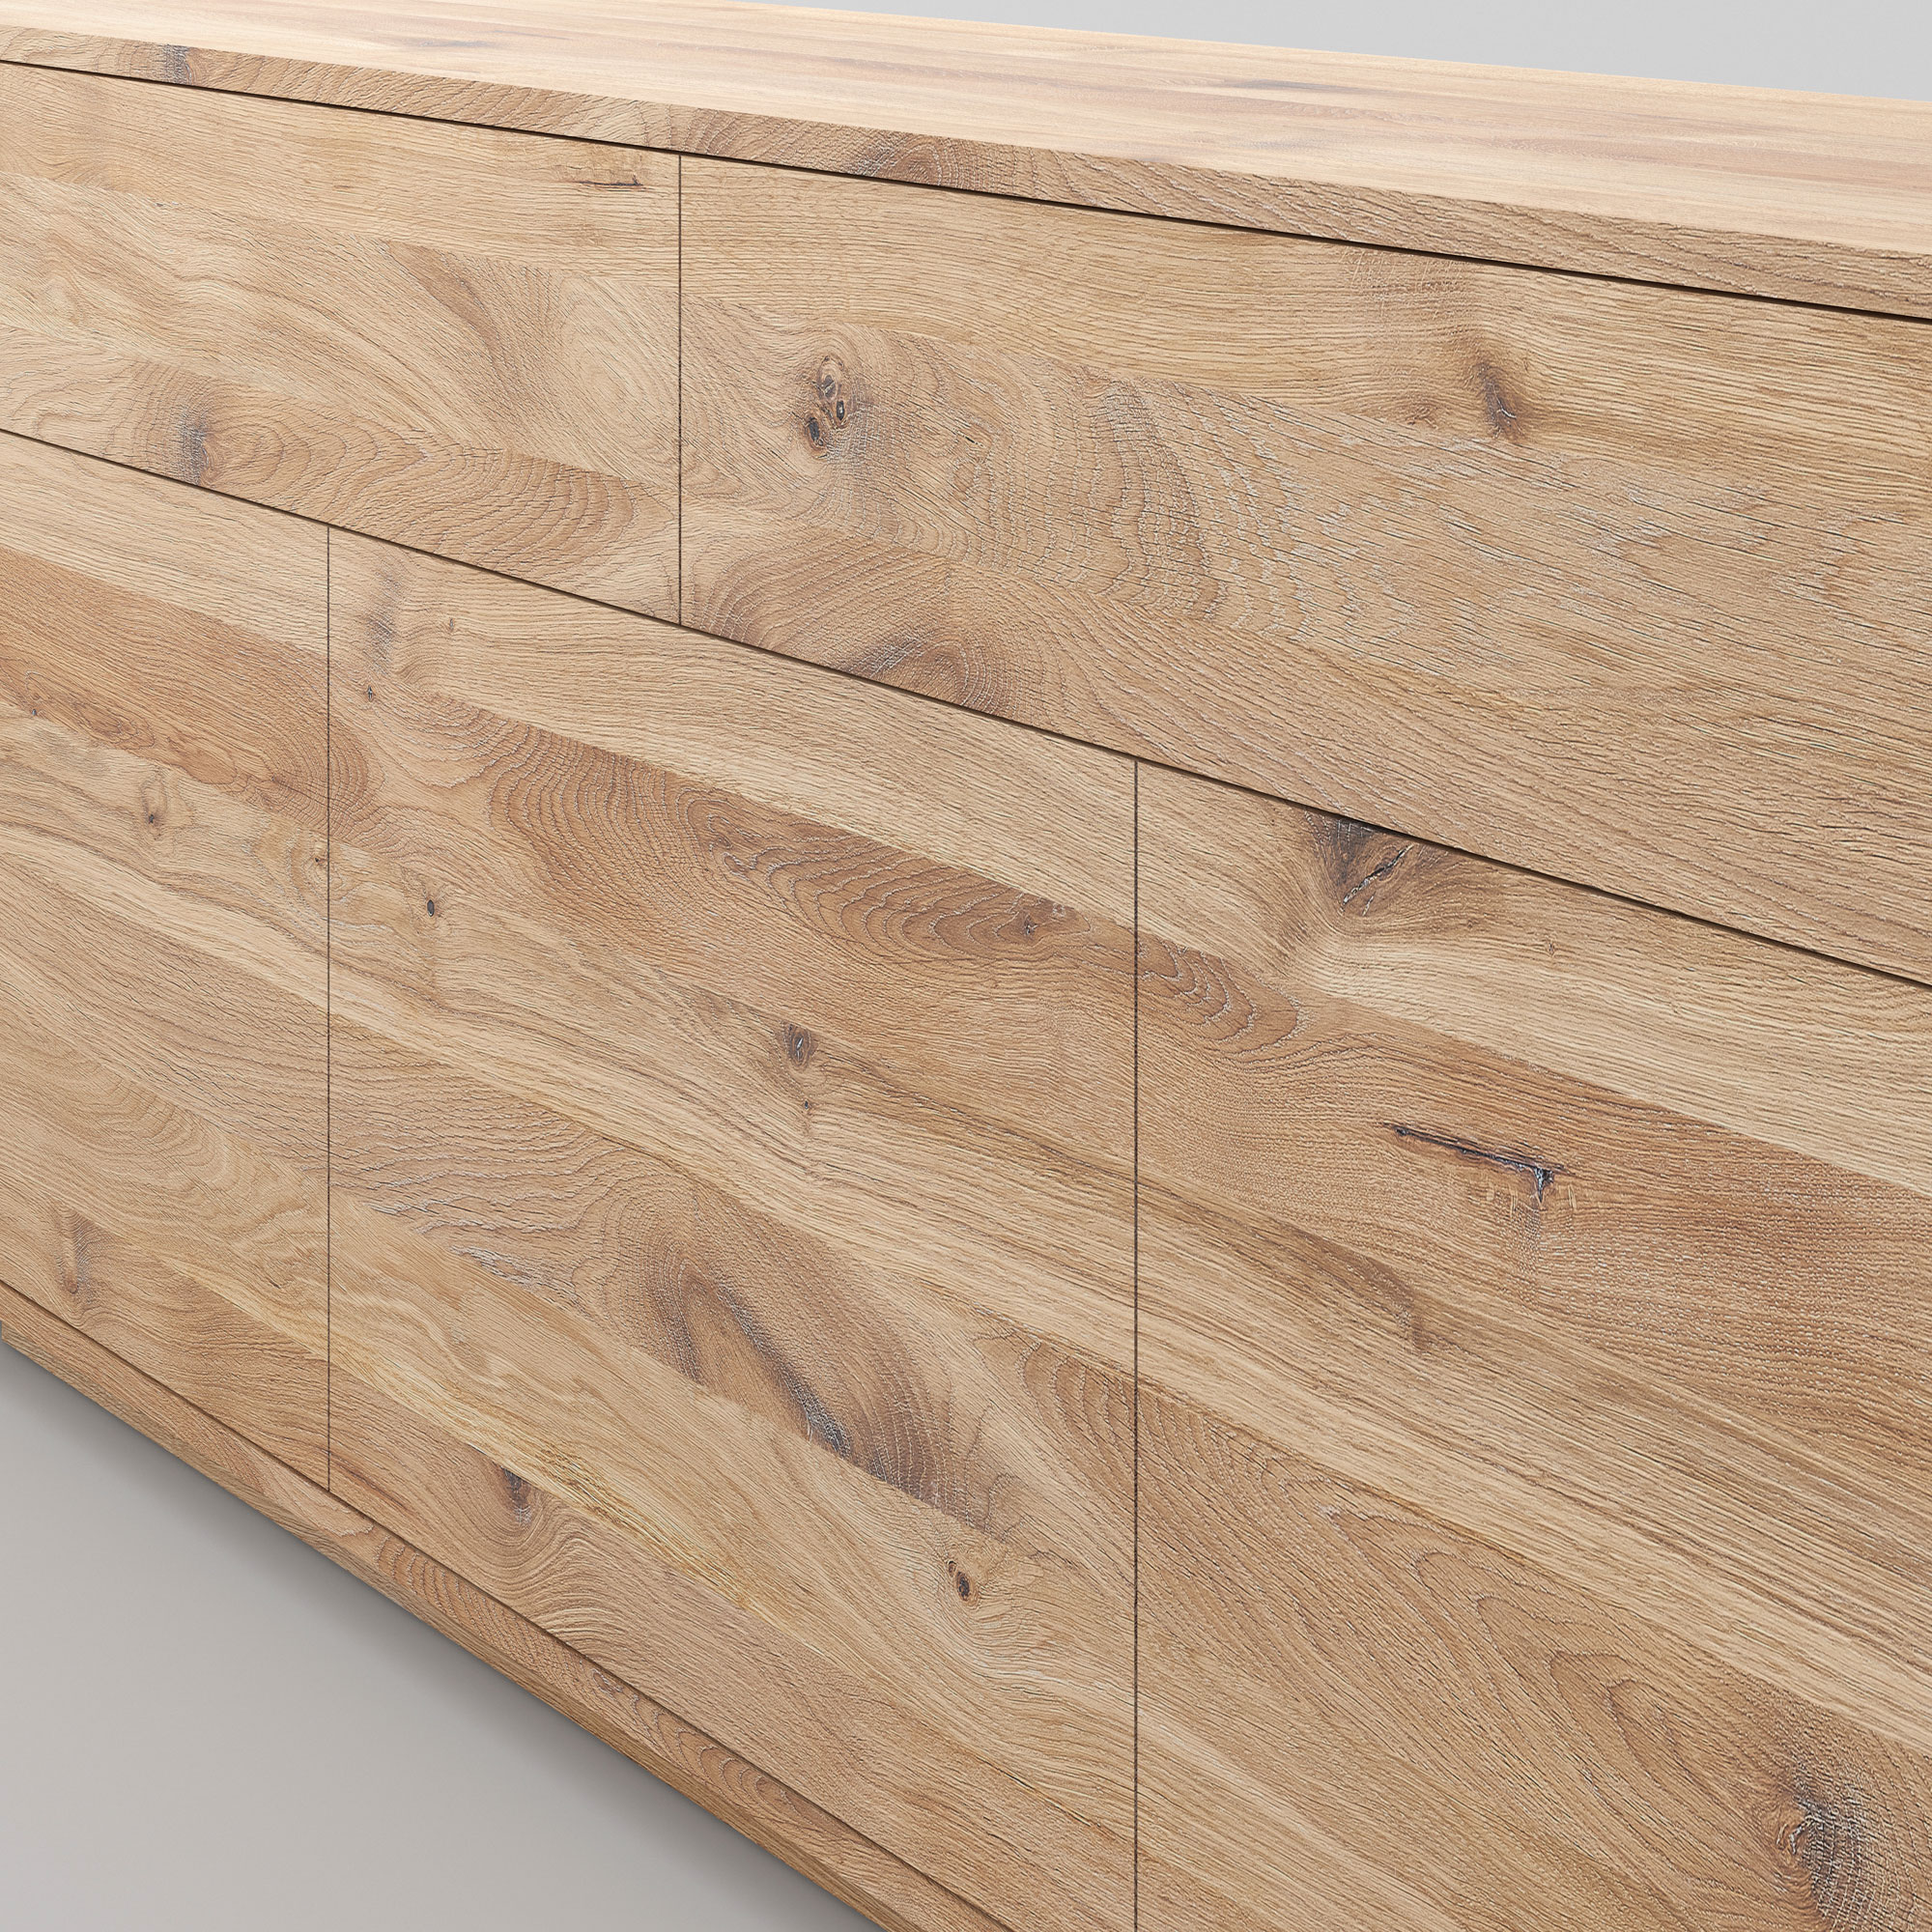 Wooden Designer Sideboard LINEA cam4 custom made in solid wood by vitamin design